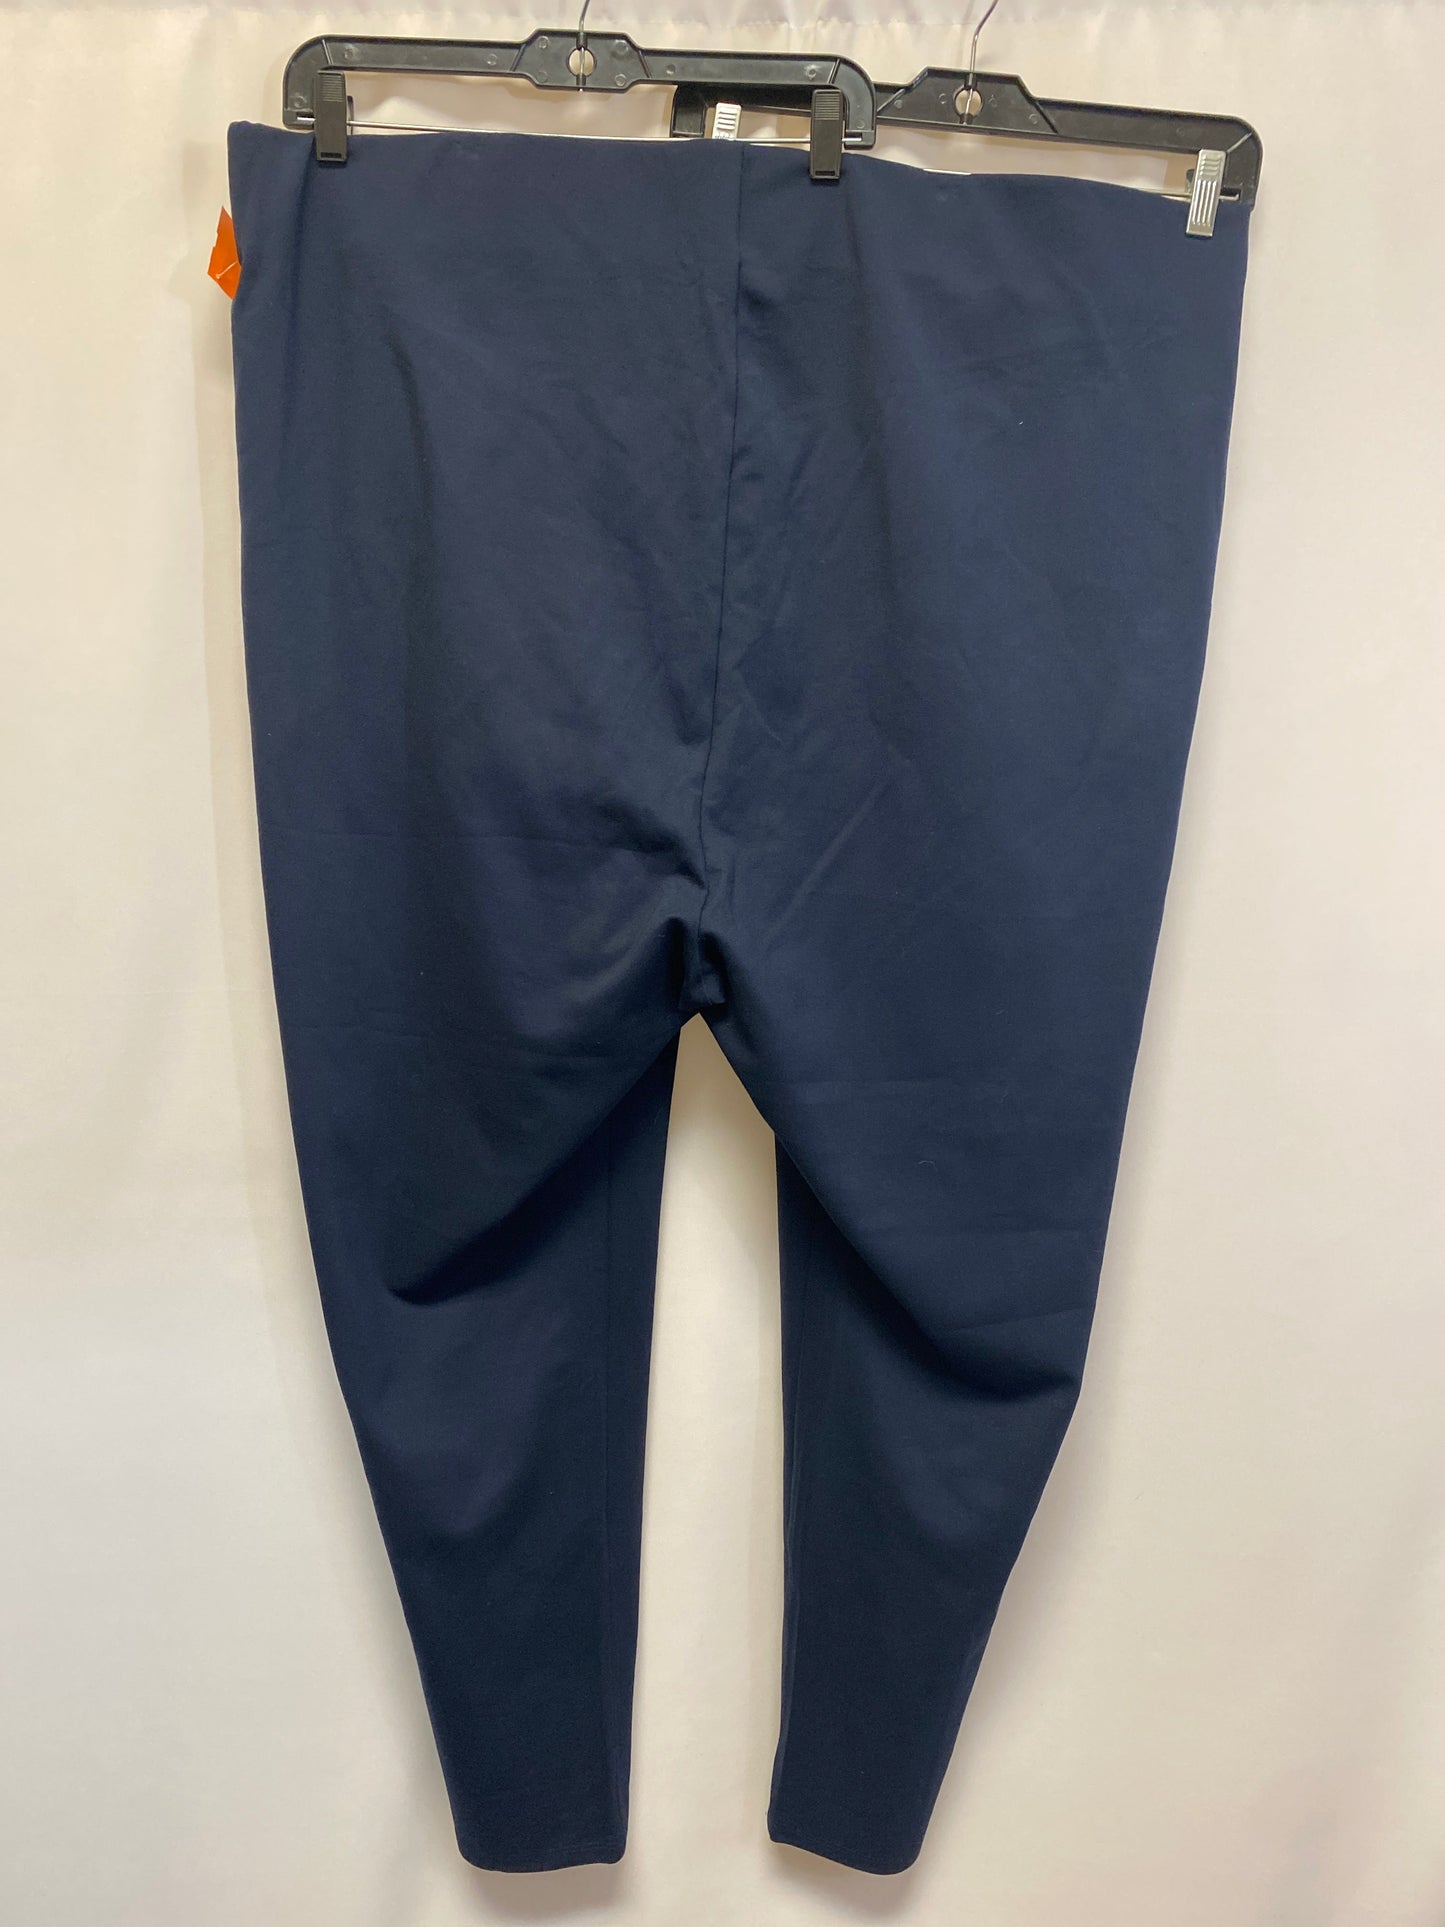 Pants Dress By Old Navy  Size: 4x